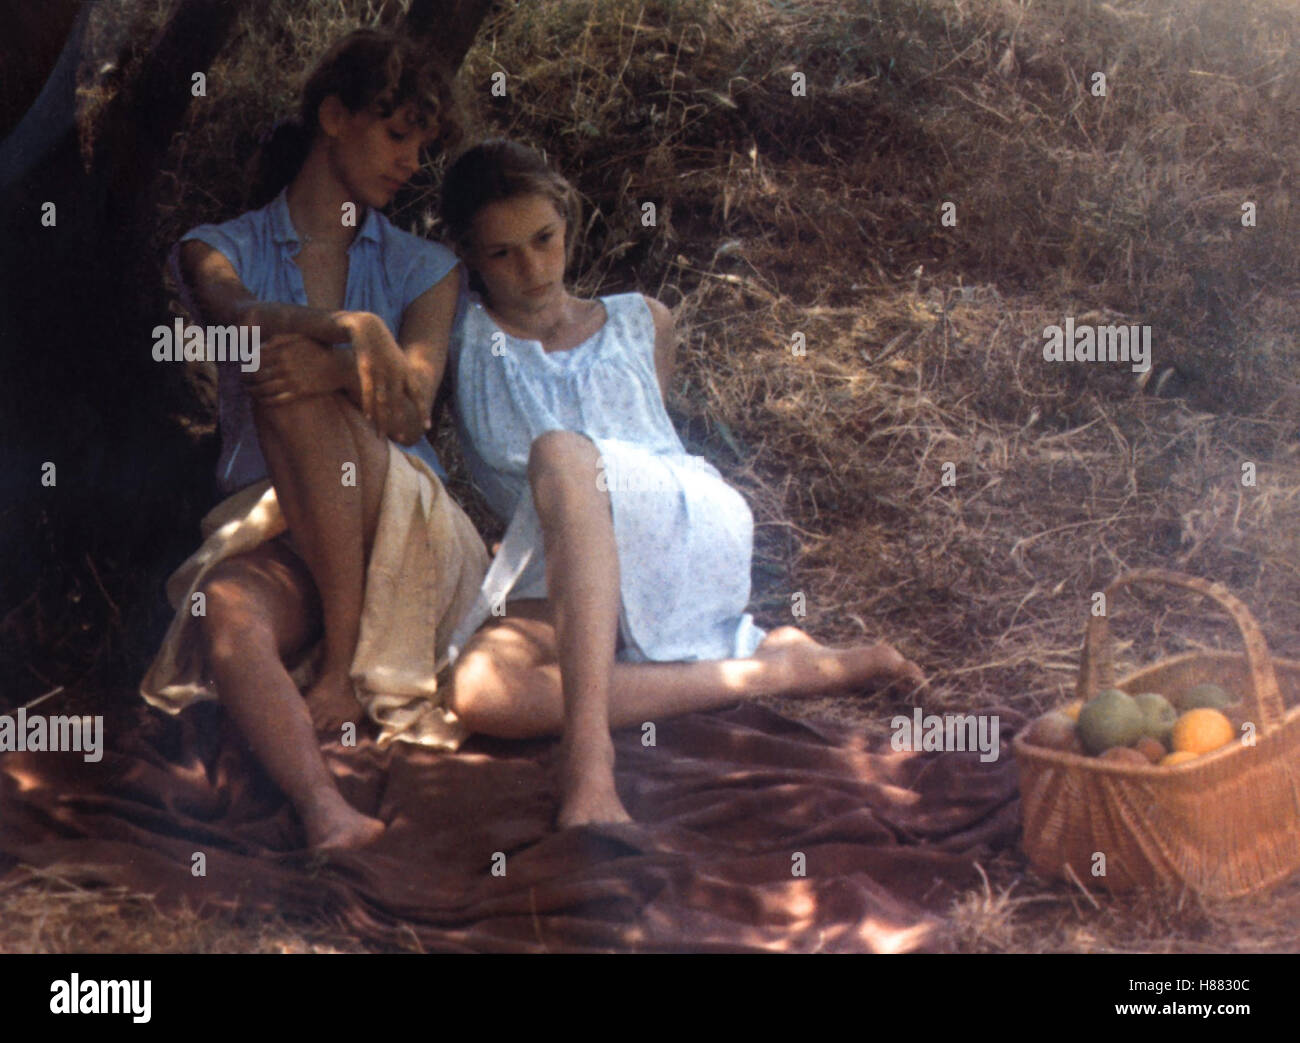 Picknick Korb Fotos e Imágenes de stock - Alamy